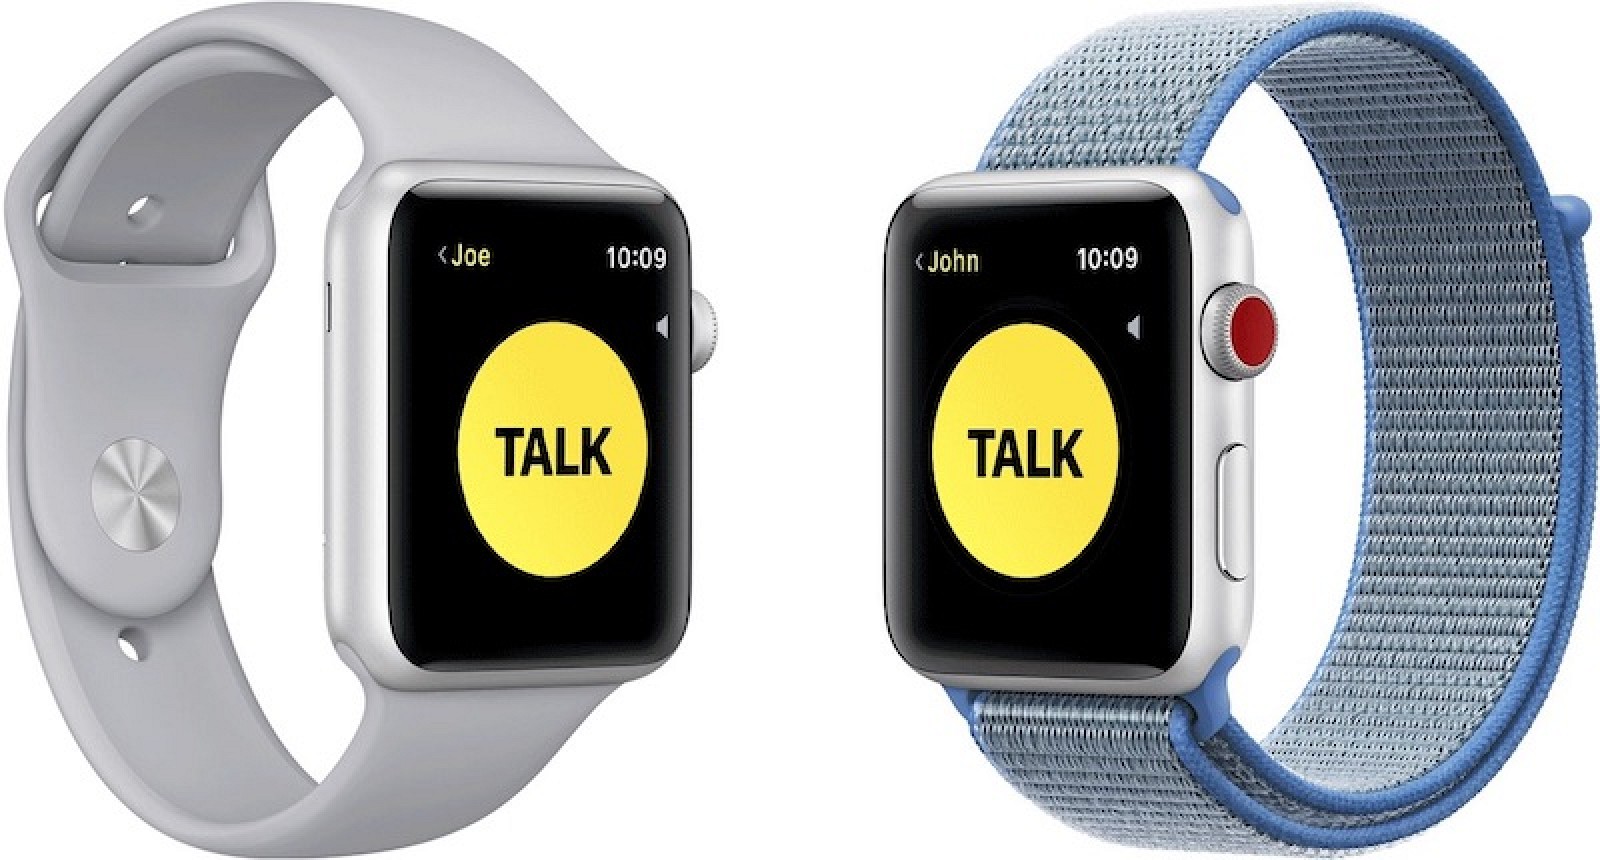 Apple's Walkie-Talkie Apple Watch App Works Again ...